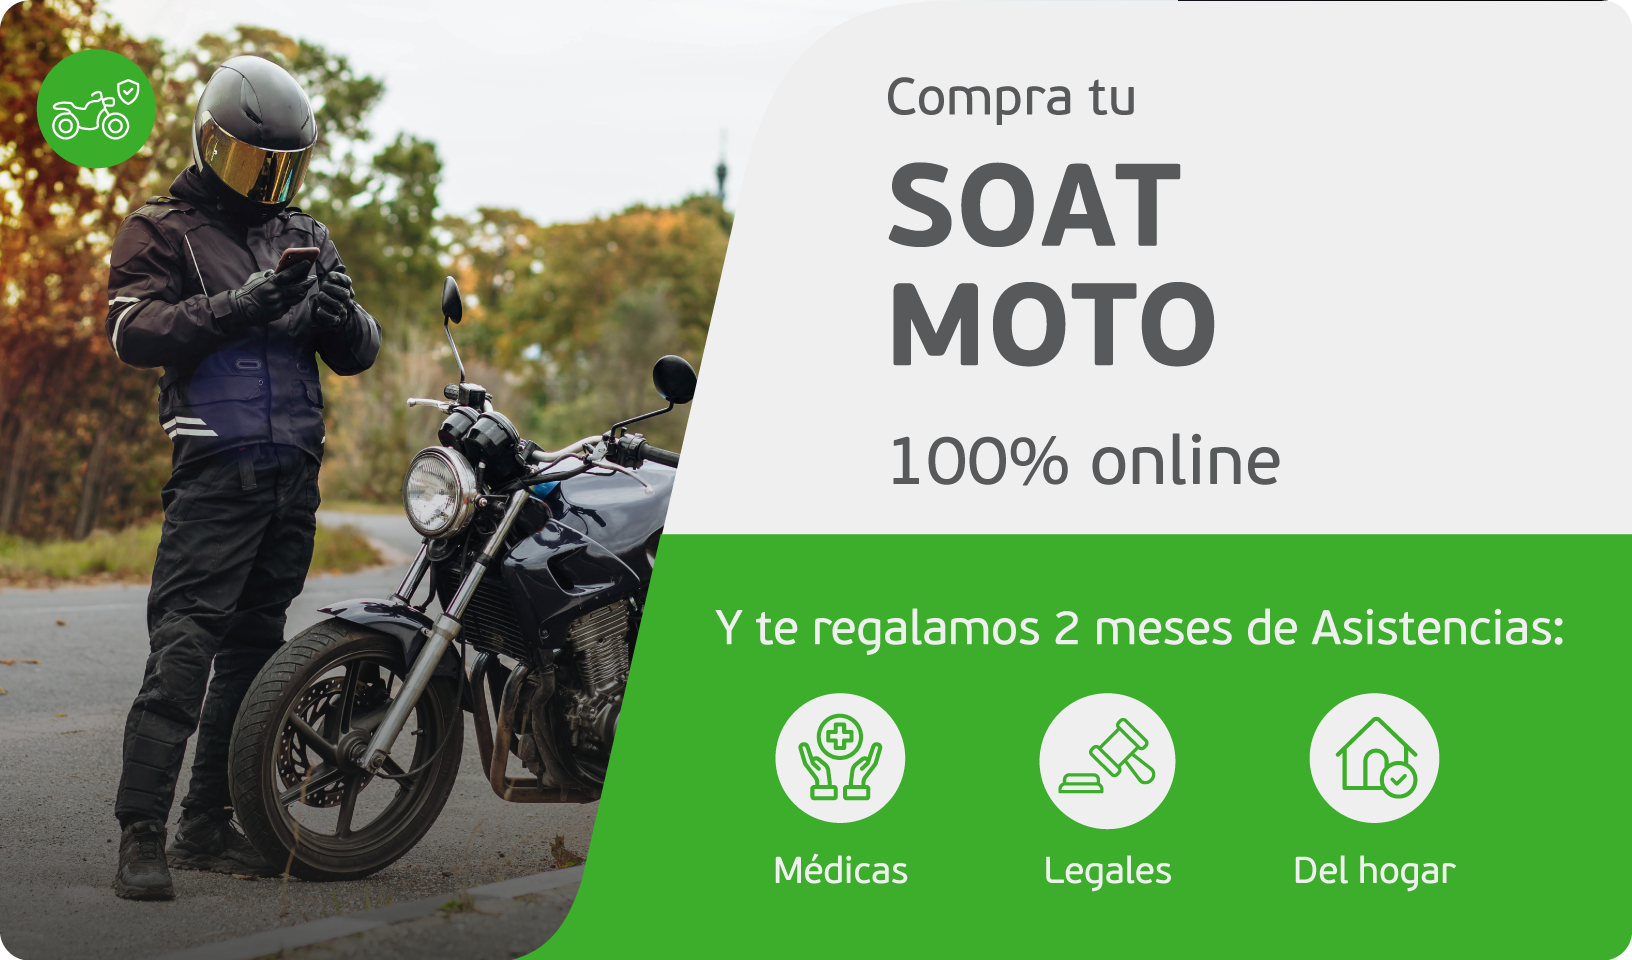 SOAT Moto